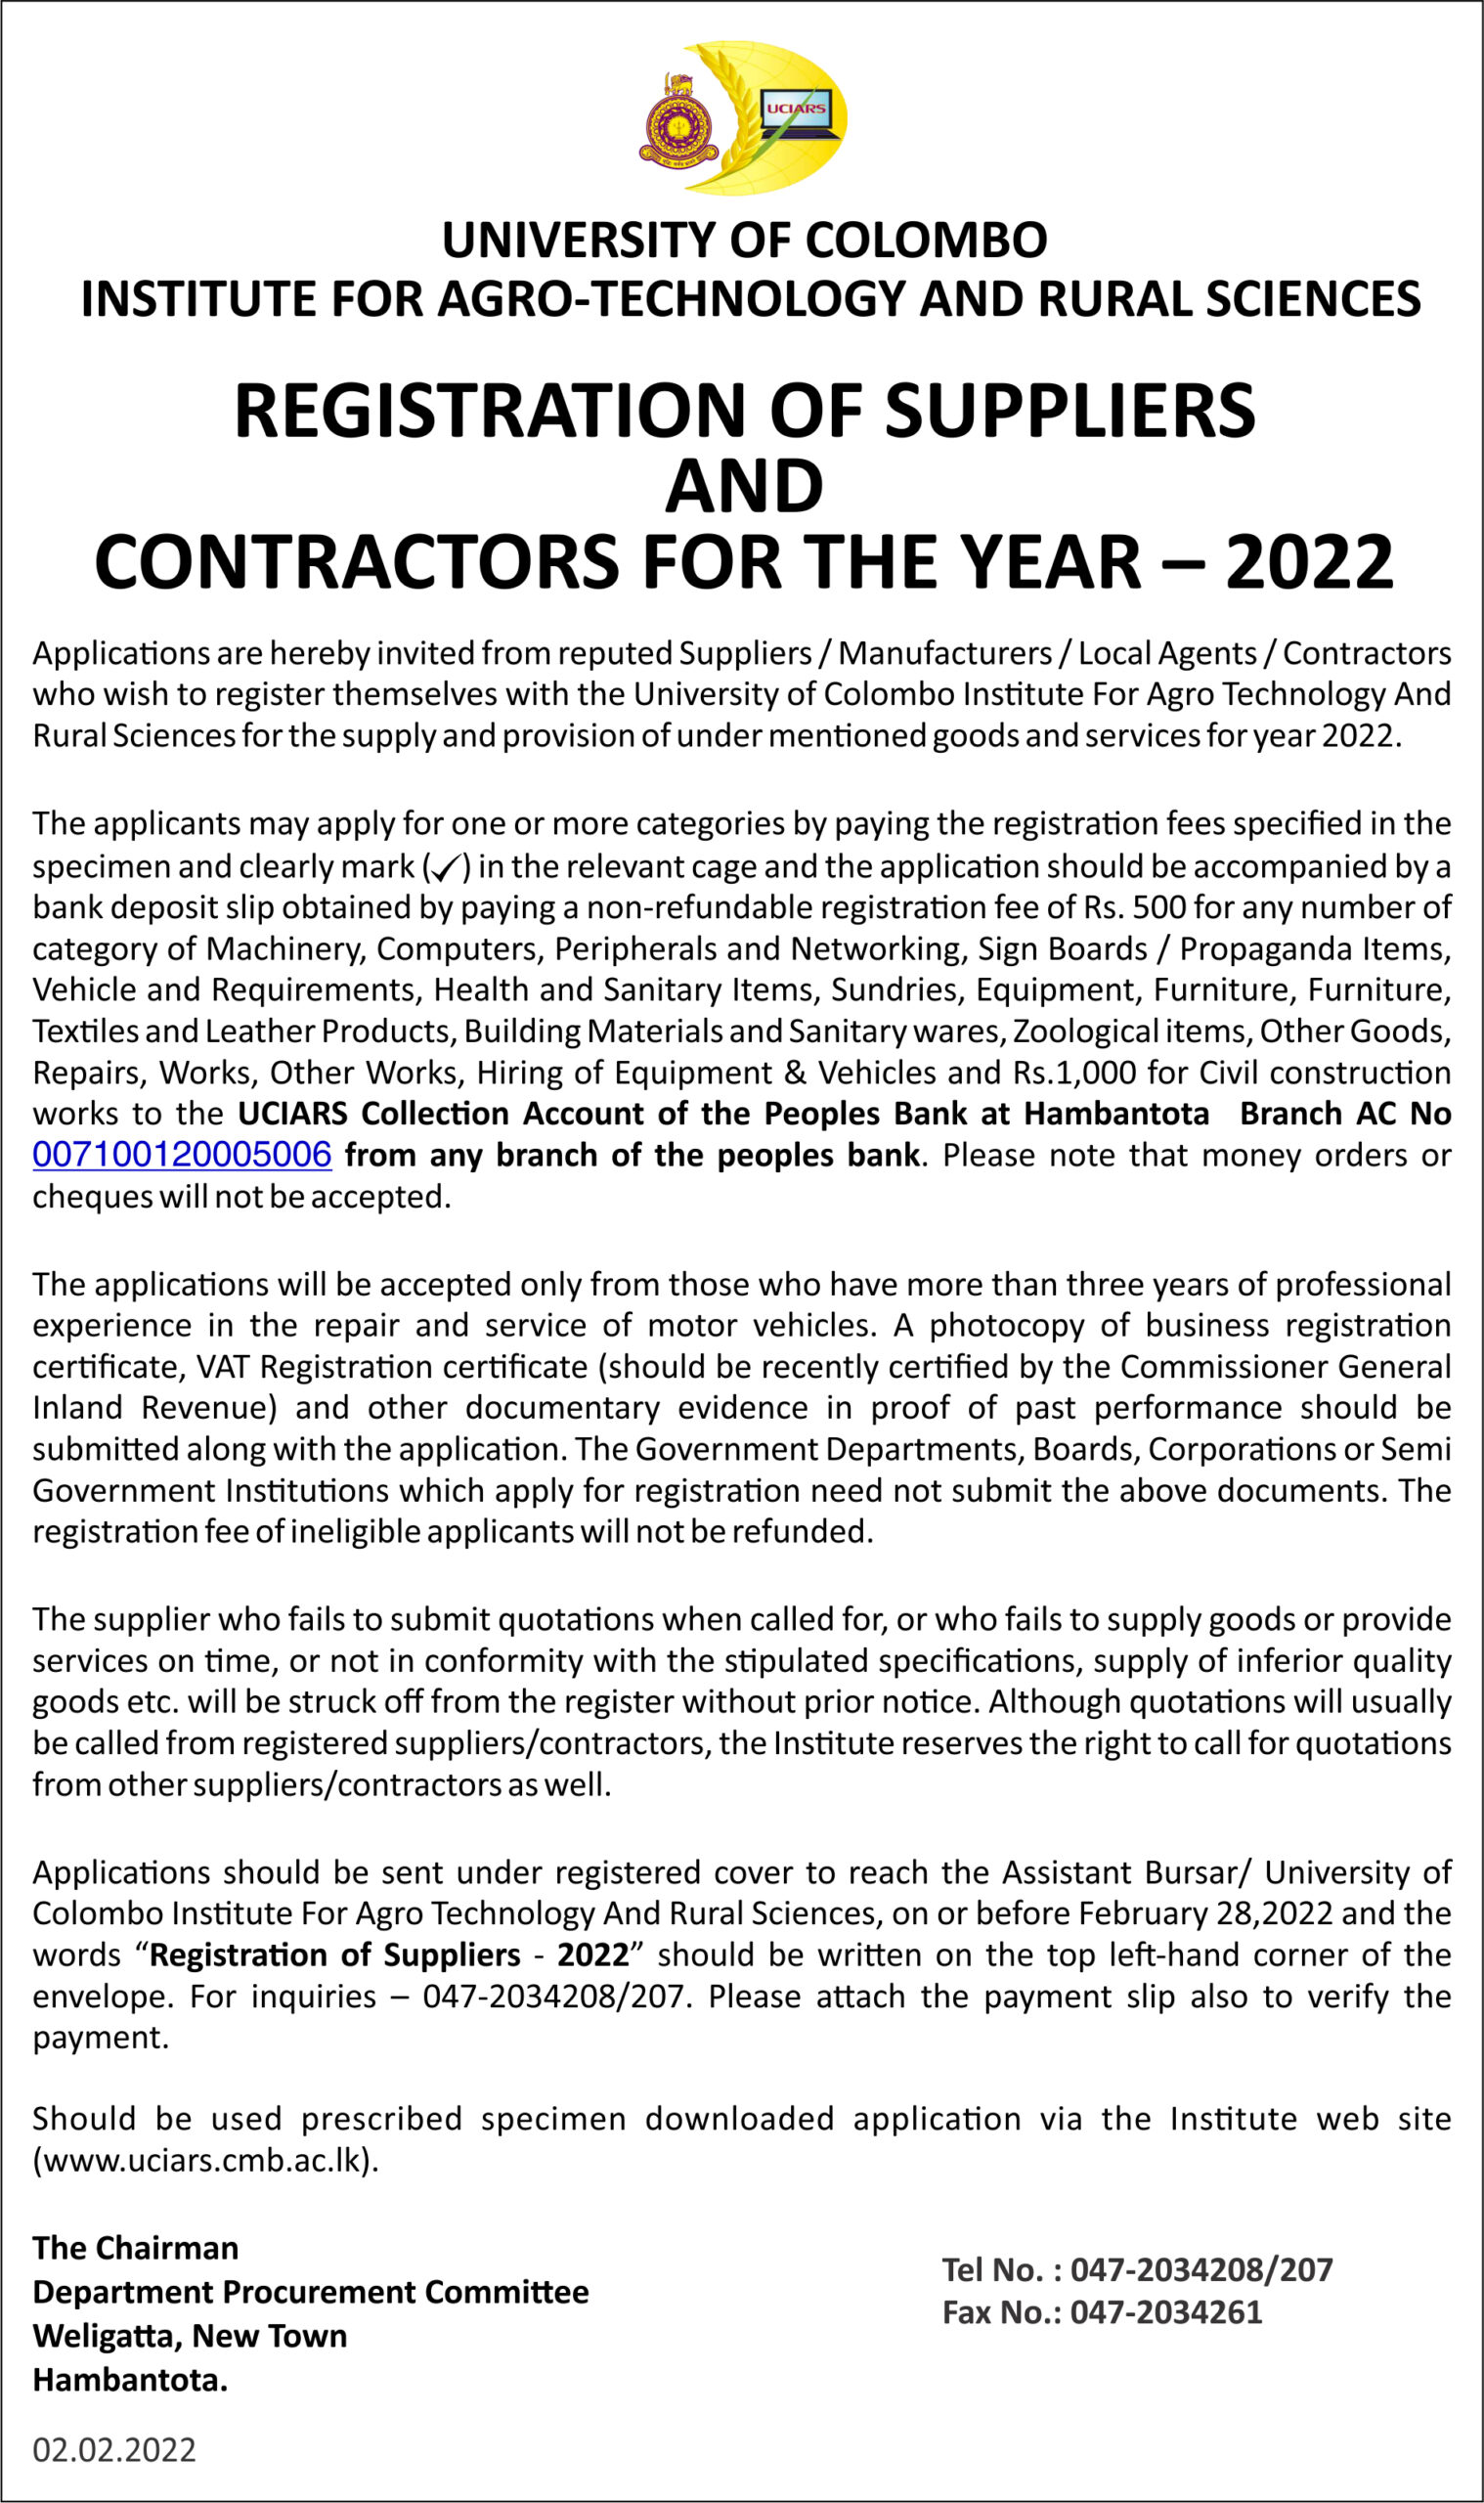 REGISTRATION OF SUPPLIERS AND CONTRACTORS FOR THE YEAR – 2022 වර්ෂය සඳහා සැපයුම්කරුවන් සහ කොන්ත්‍රාත්කරුවන් ලියාපදිංචි කිරීම